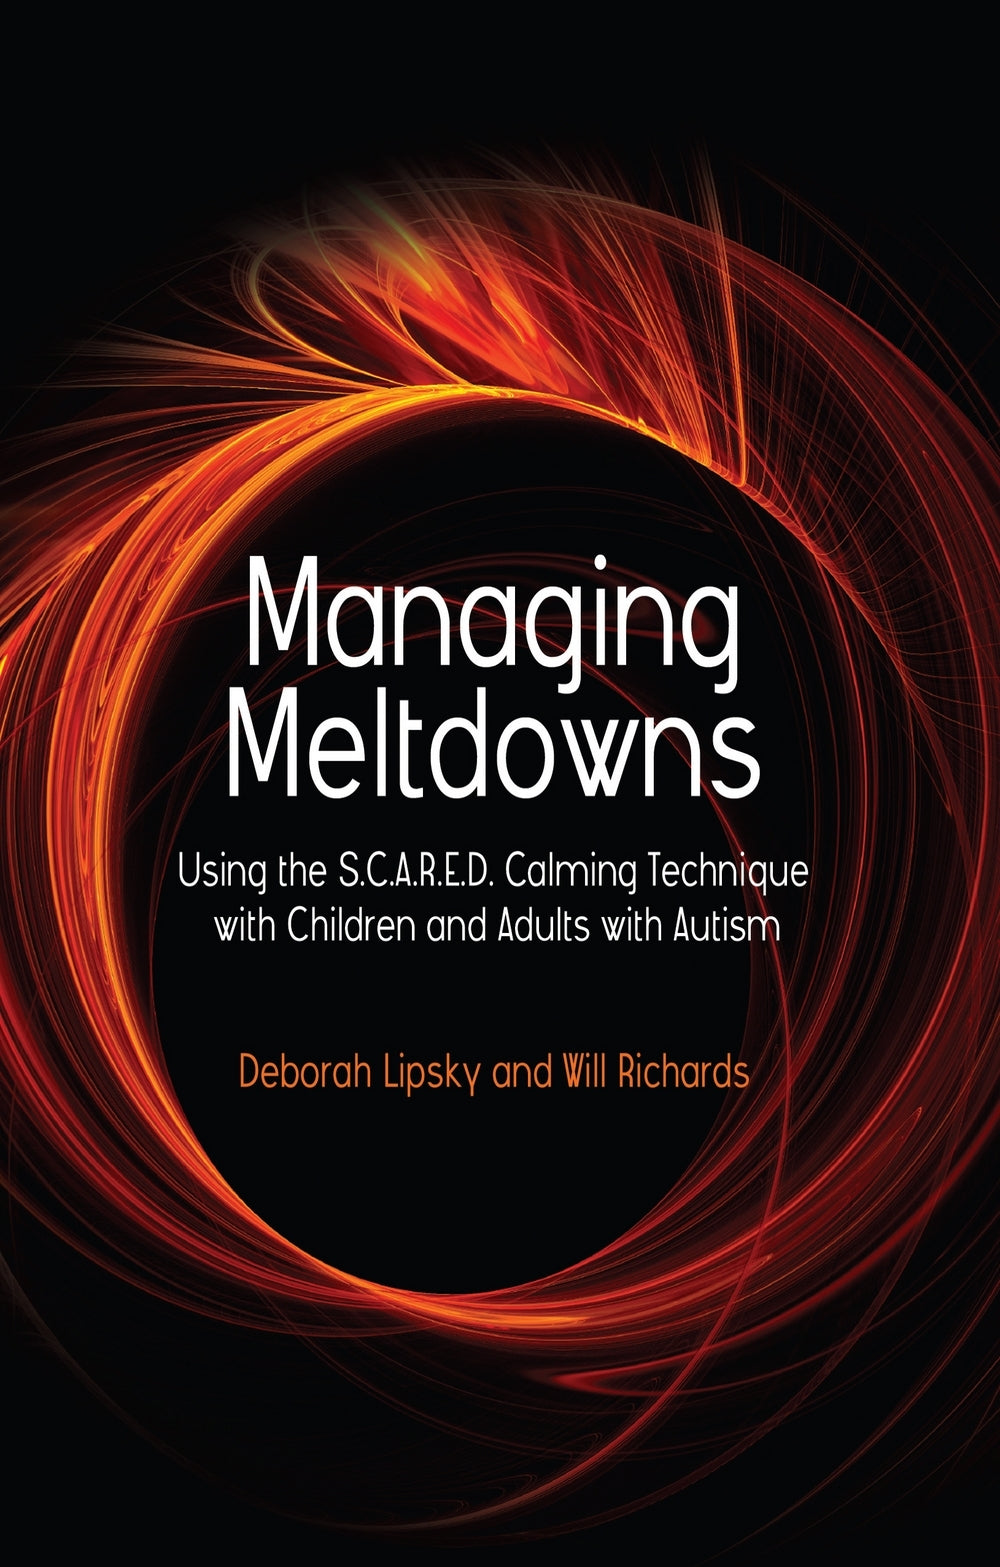 Managing Meltdowns by Hope Richards, Deborah Lipsky